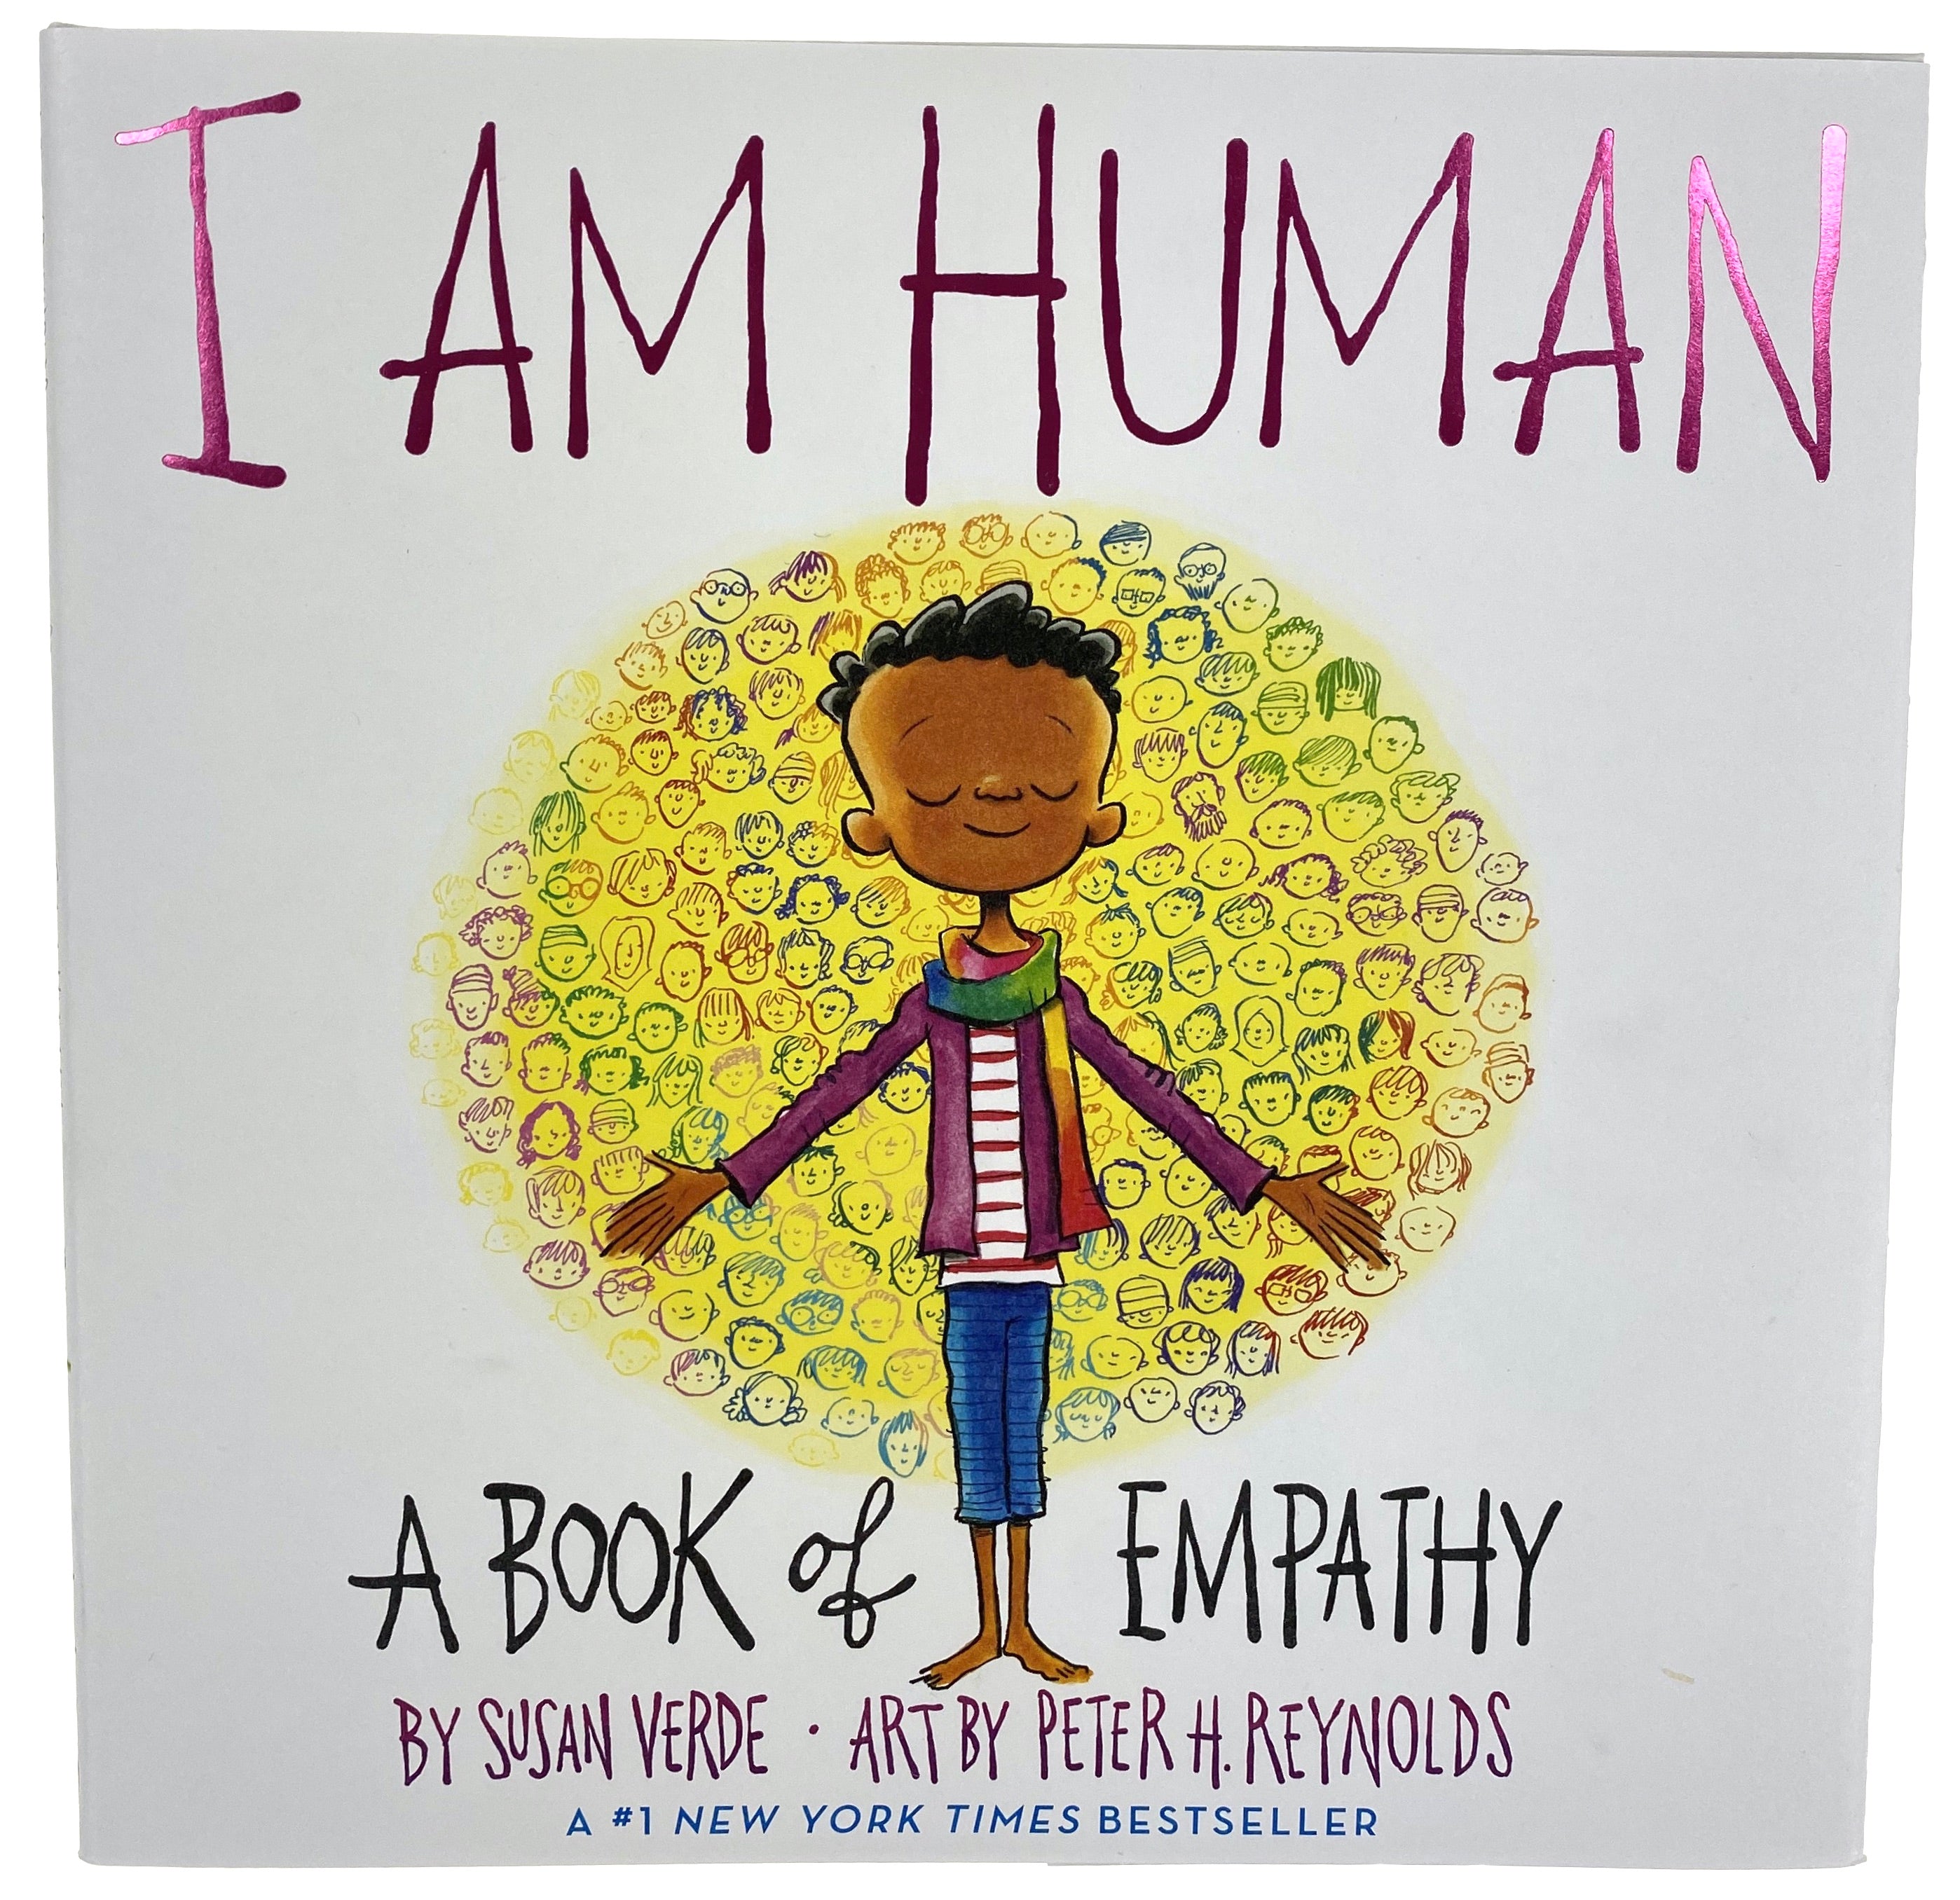 I Am Human-A Book of Empathy    